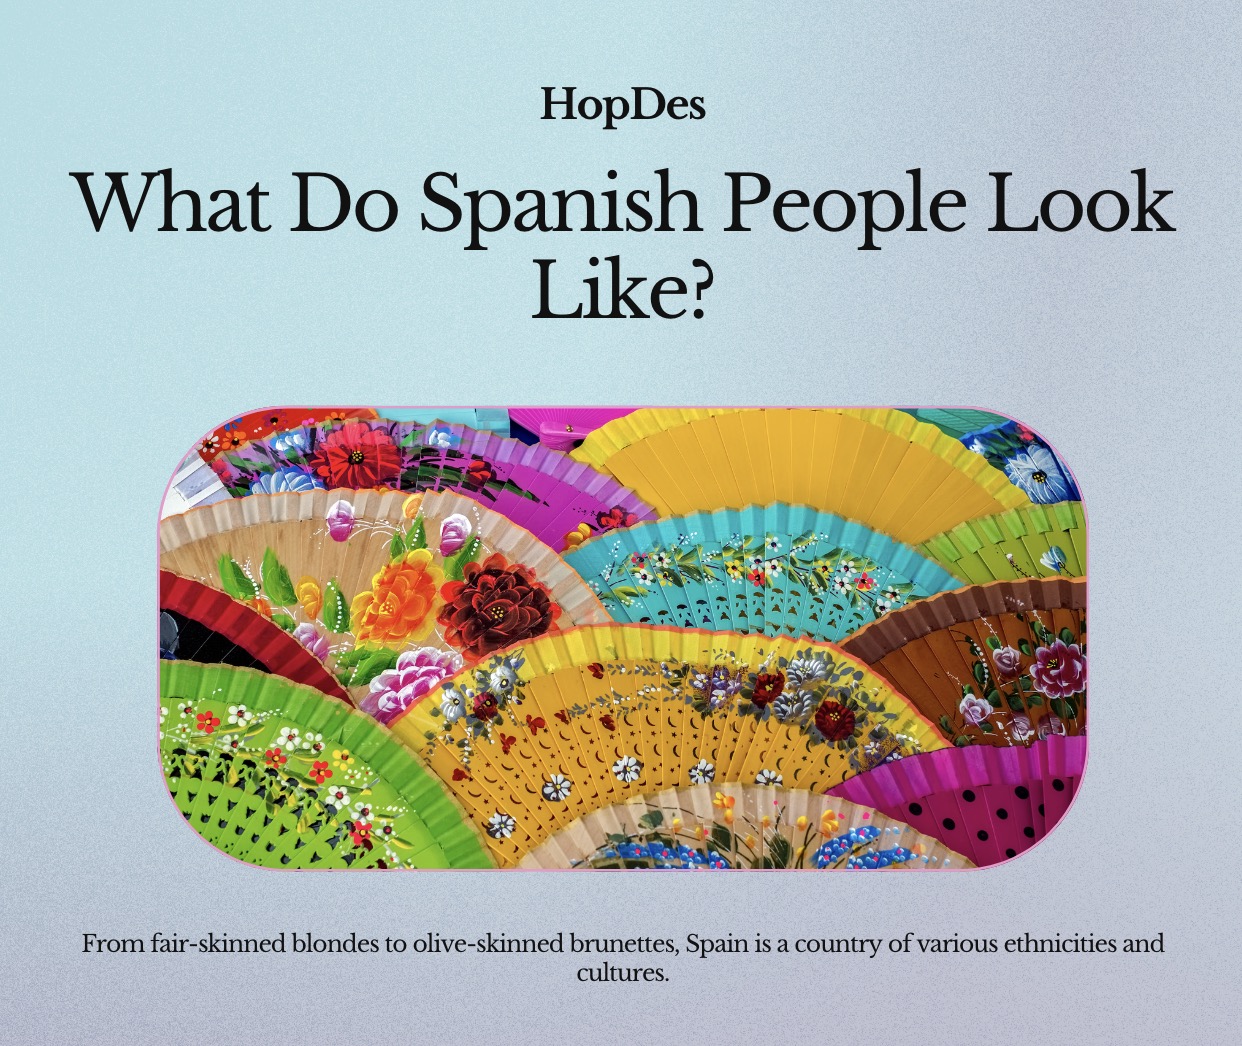 What do Spanish people look like?